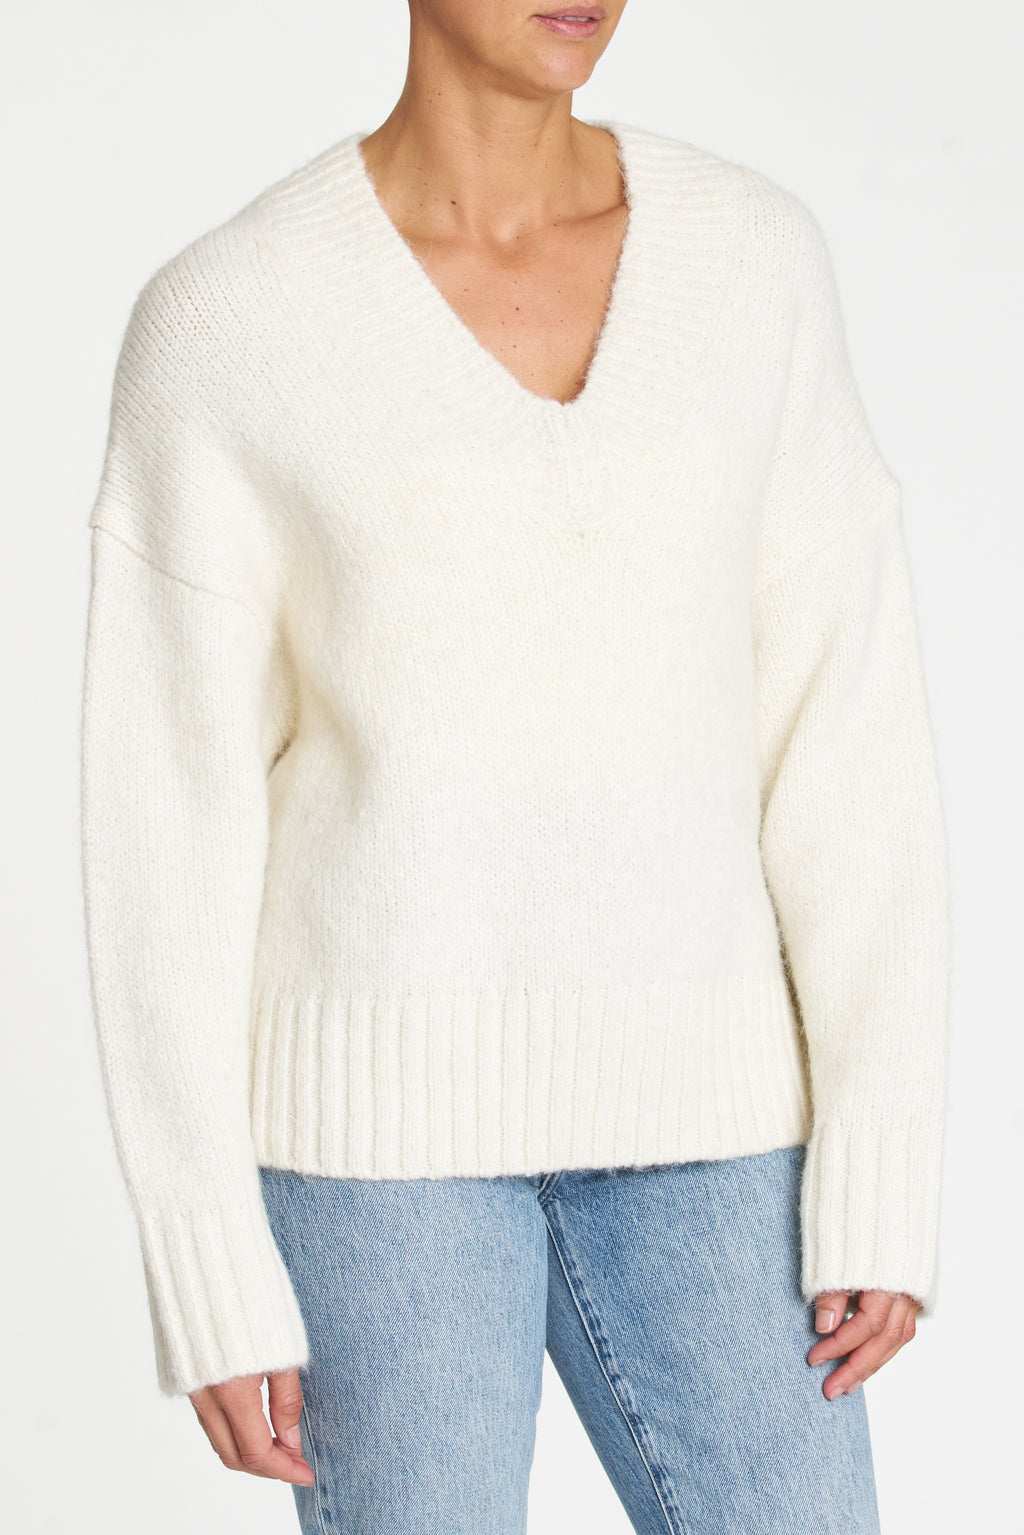 Vania Cream V-Neck Sweater ***Final Sale***